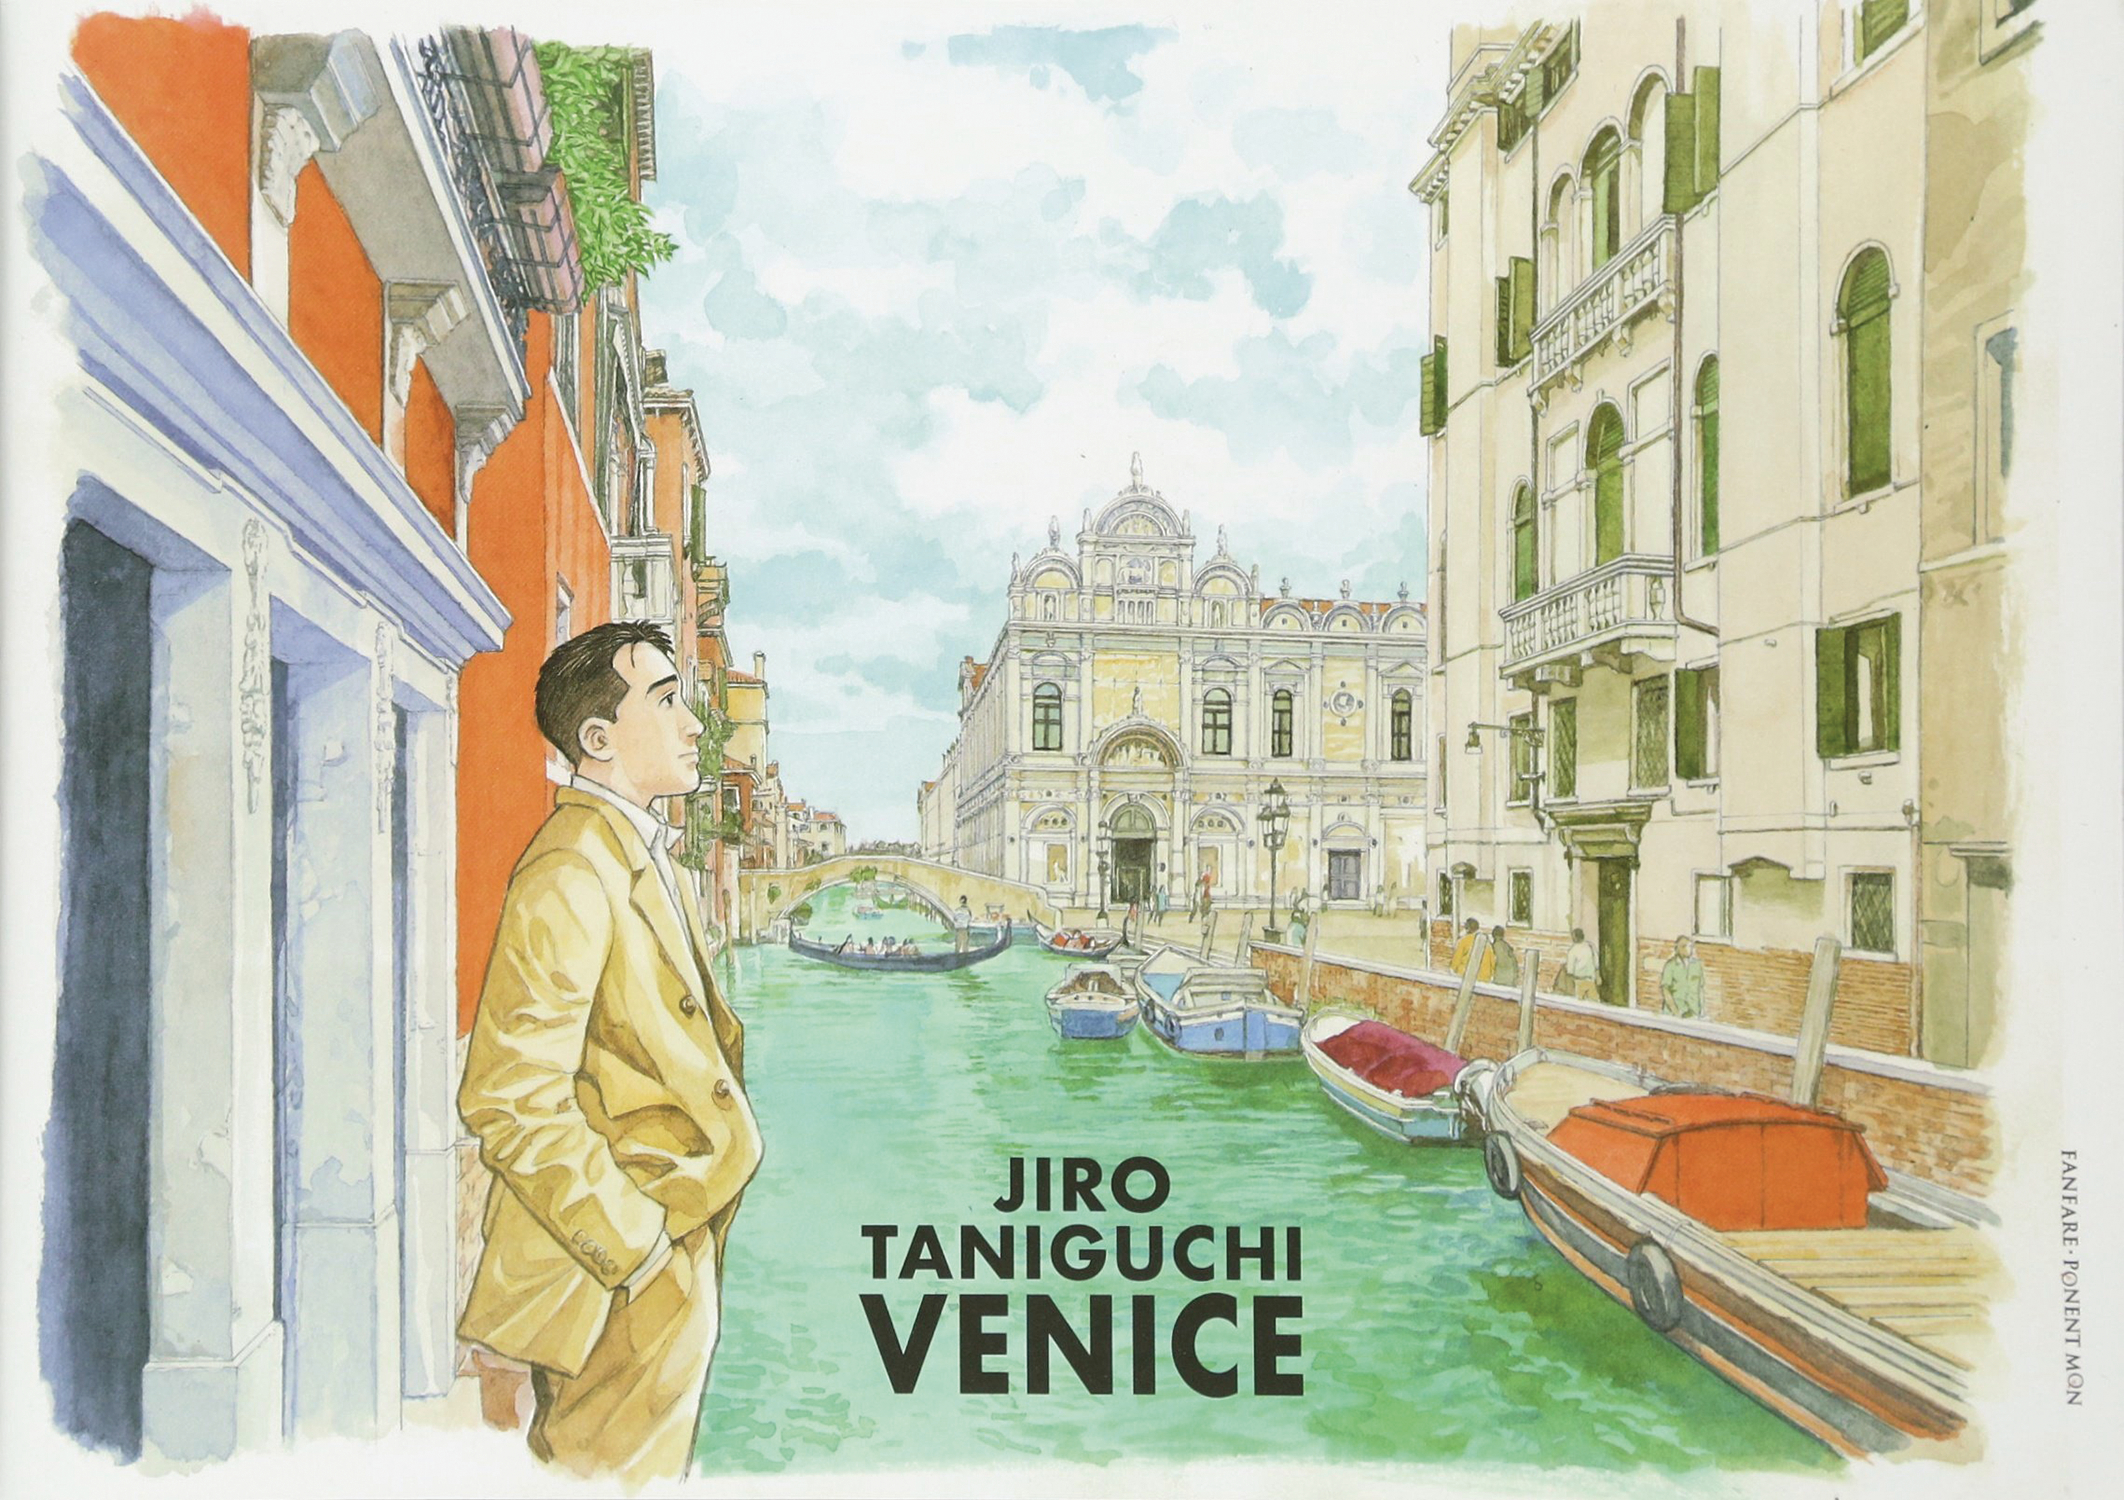 Venice Graphic Novel